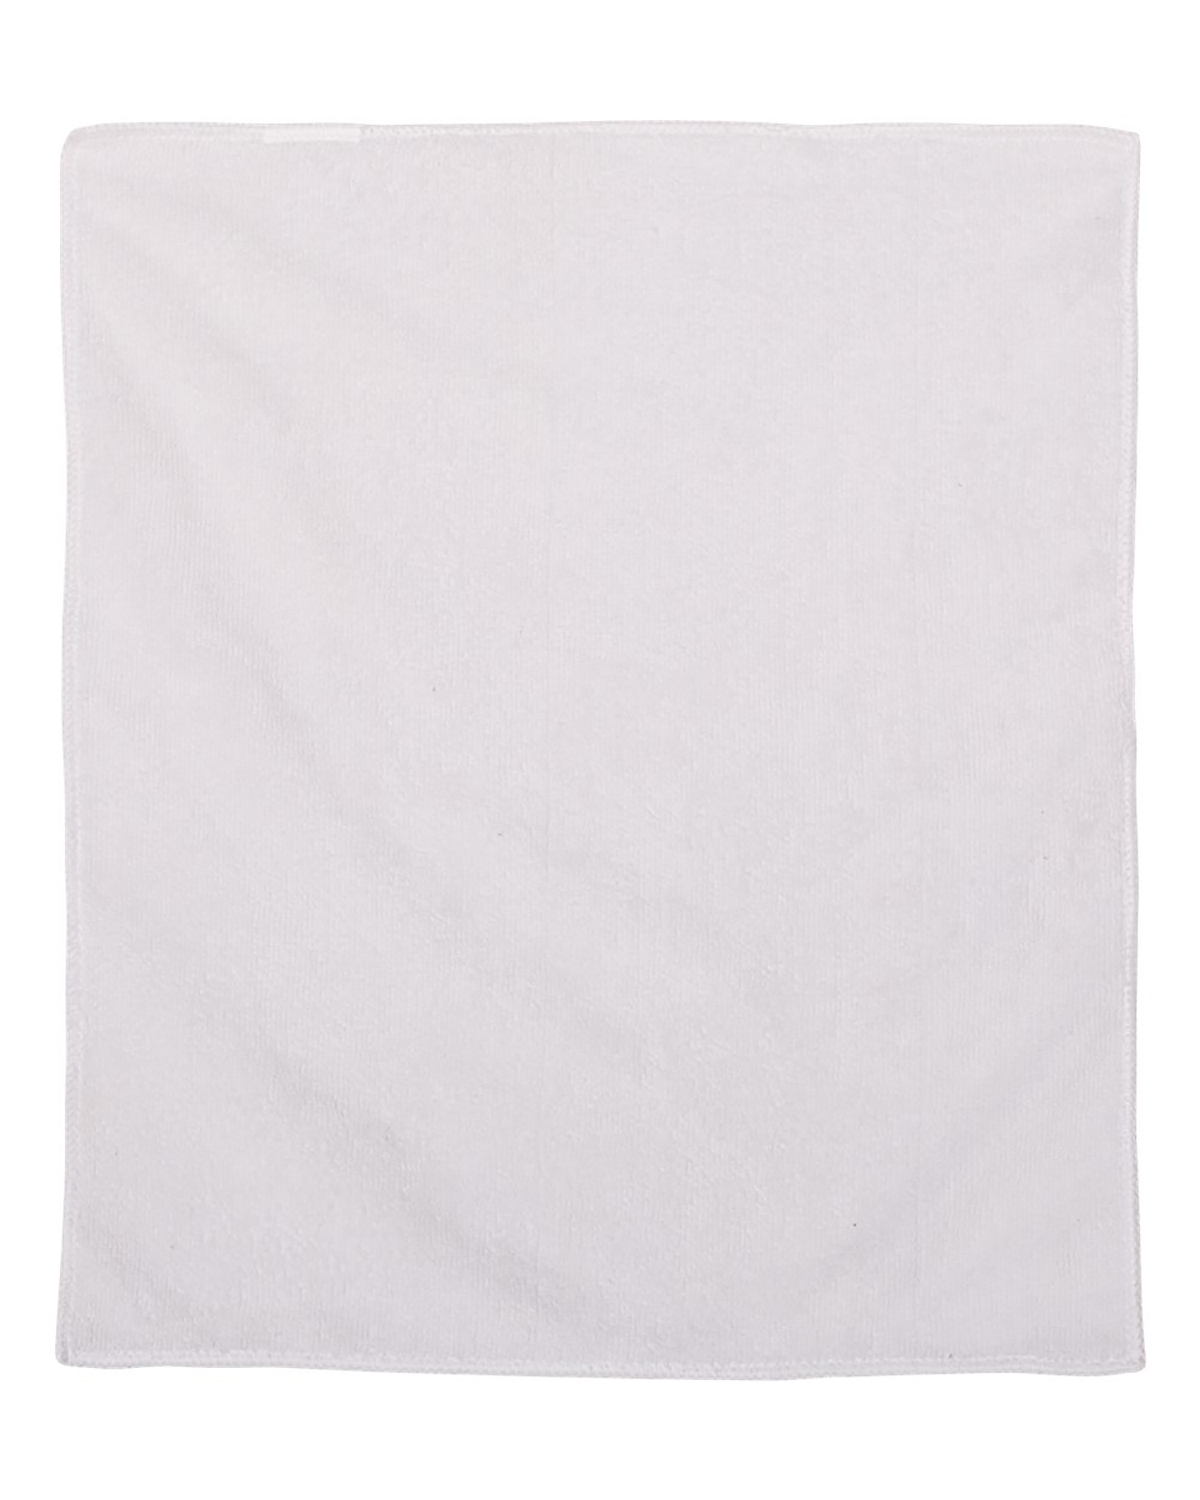 'Carmel Towel Company CSUB1518 Sublimation Towel'